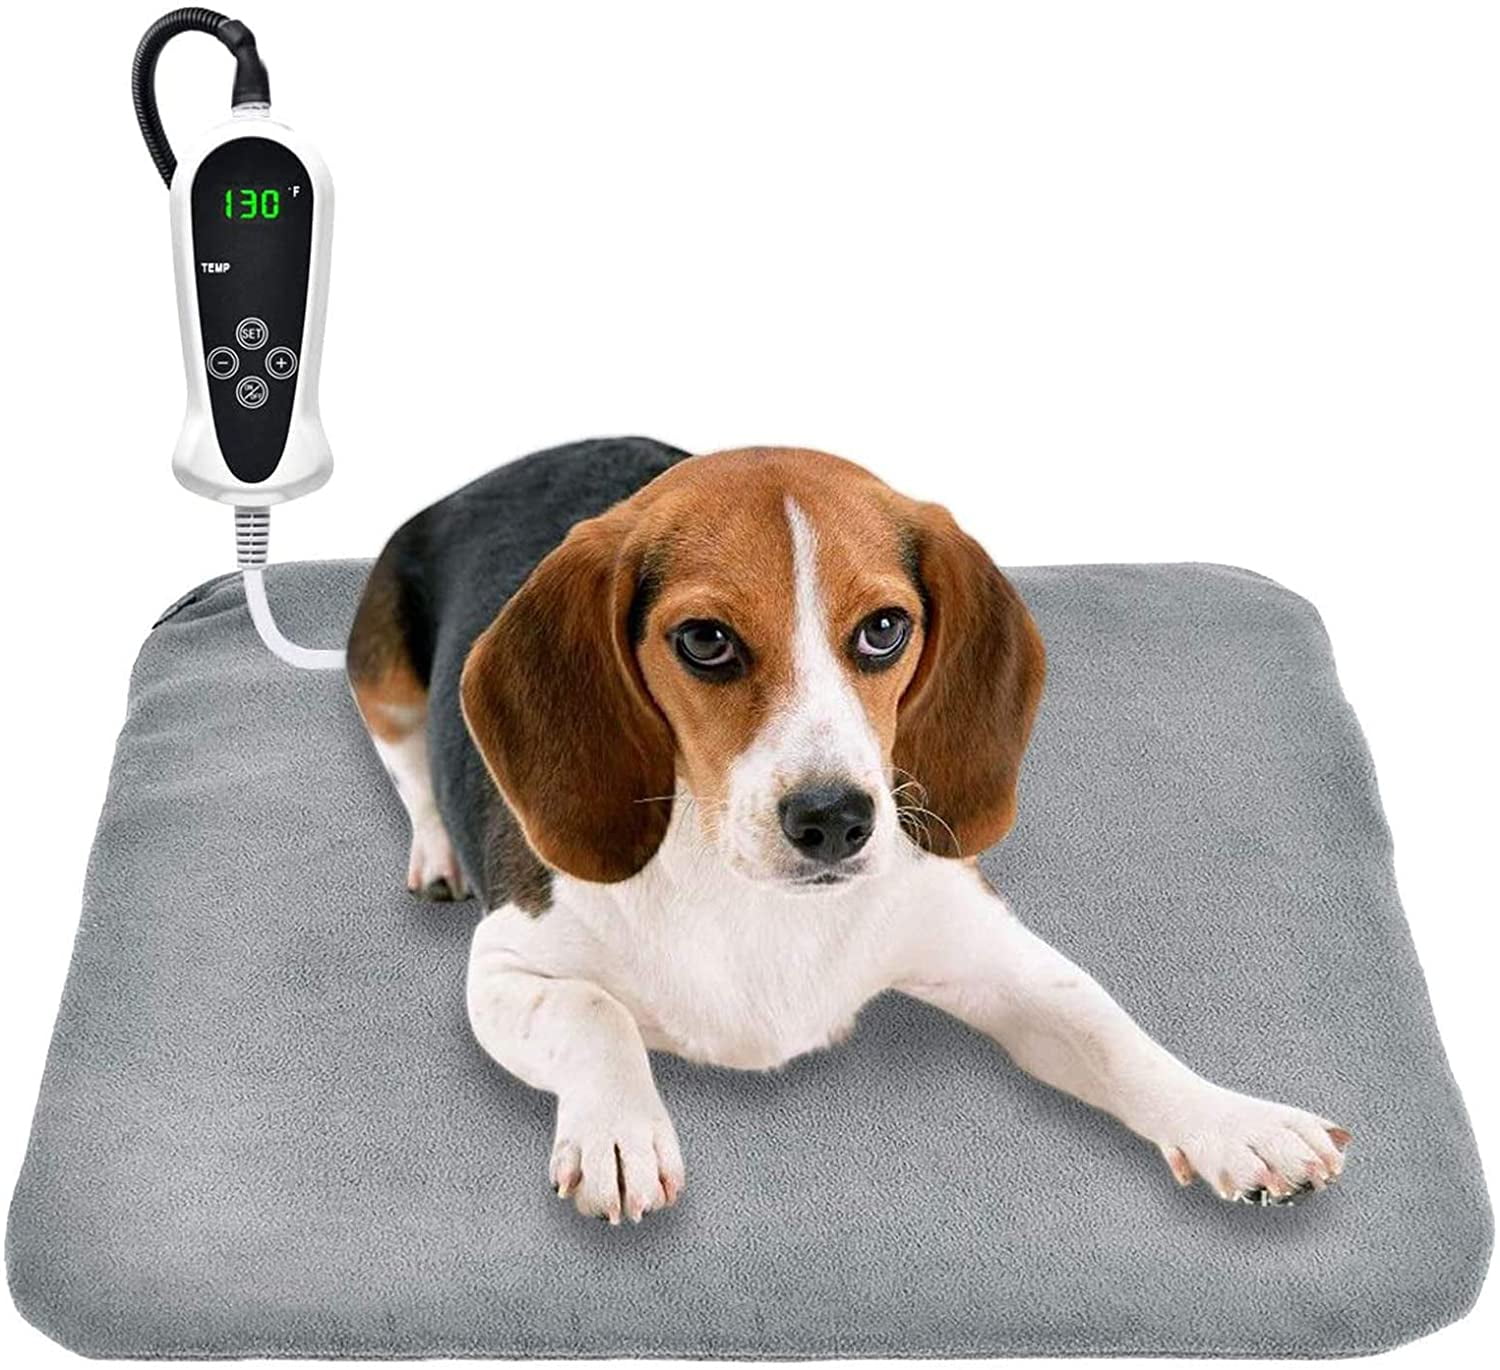 220V 20W 18'' Pet Dog Cat Electric Heating Waterproof Warmer Mat Pad Bed Blanket 